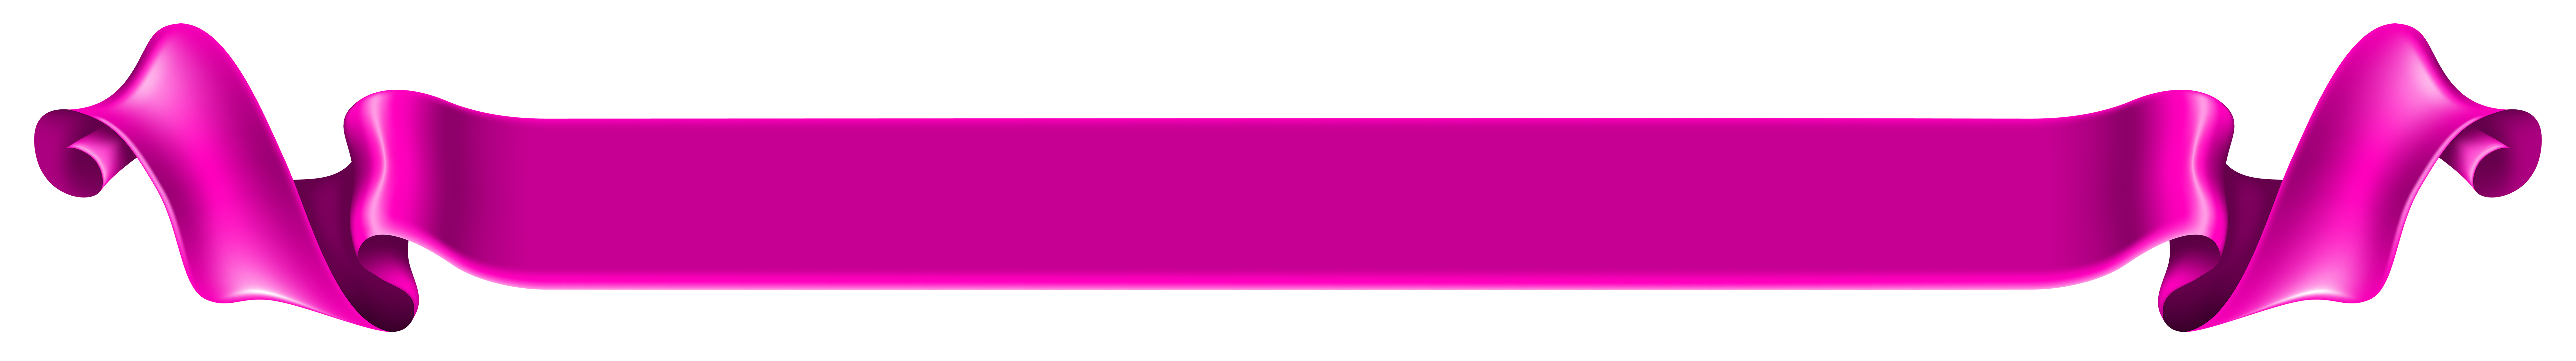 Banner violeta imagen Transparente